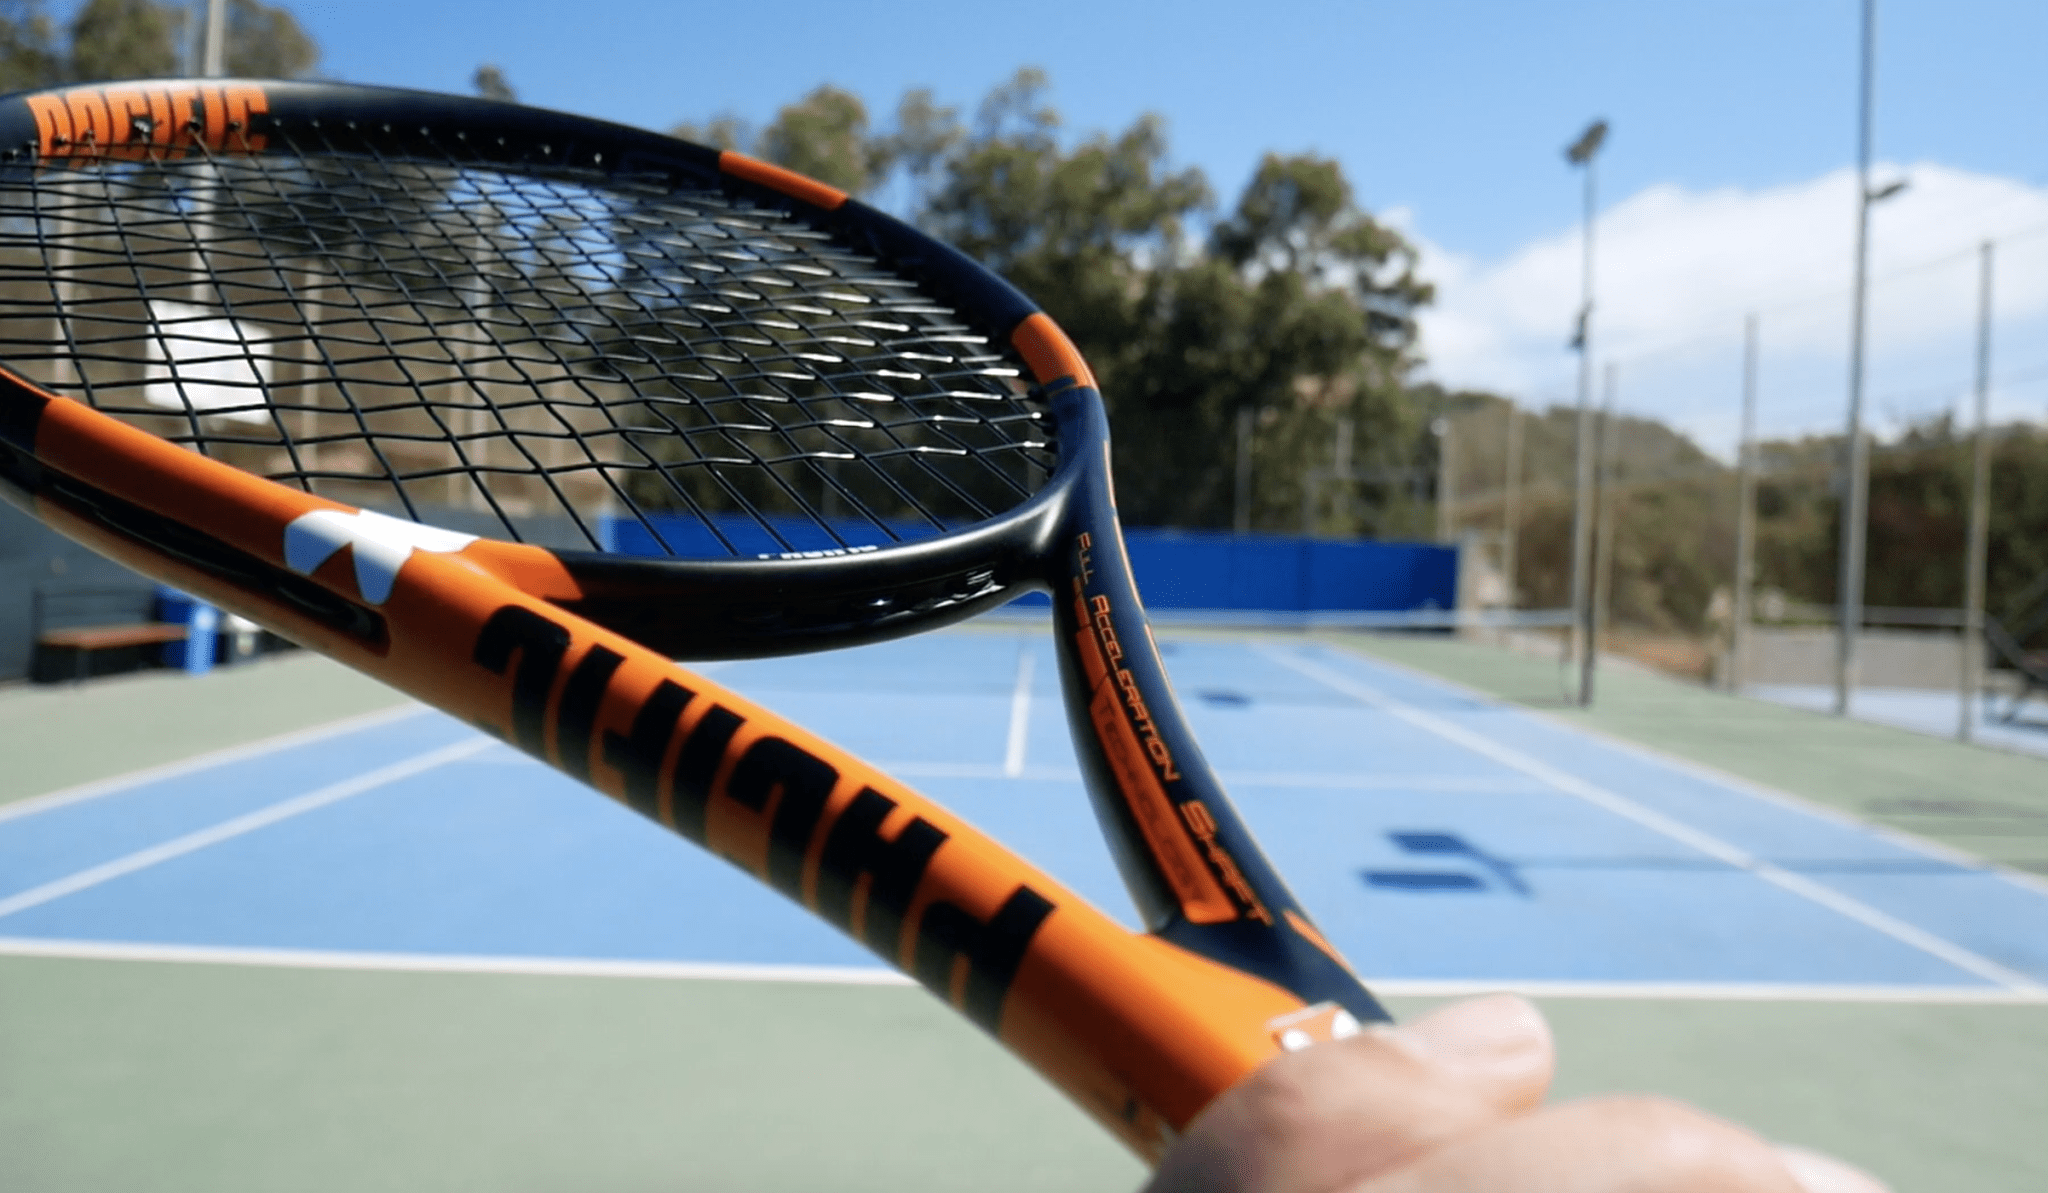 Pacific Speed Basaltx 3/8 tennis racket 